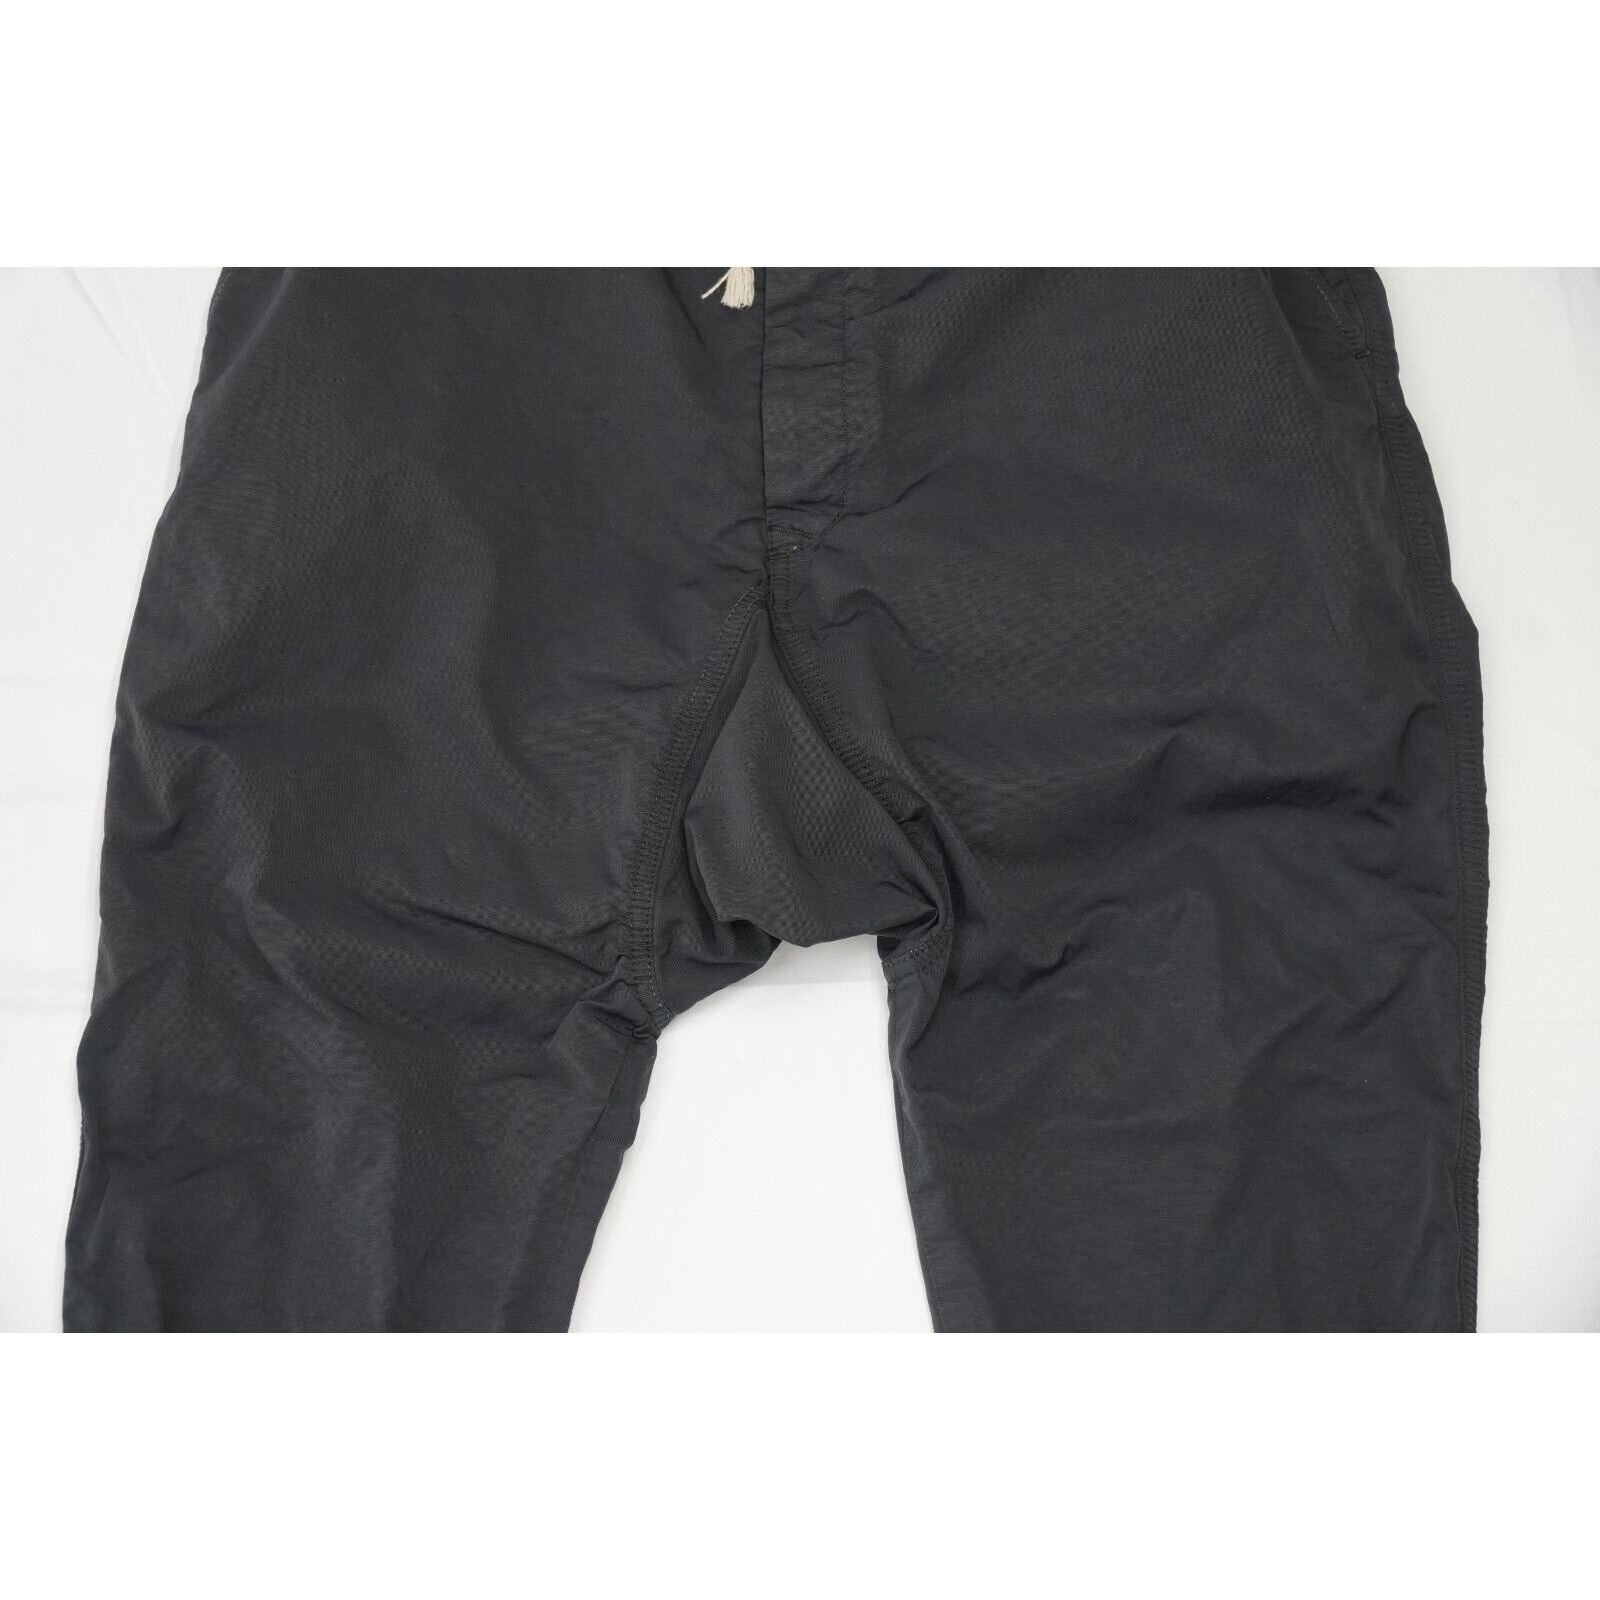 Black Lounge Pants Elastic Drawstring Drop Crotch Large - 3